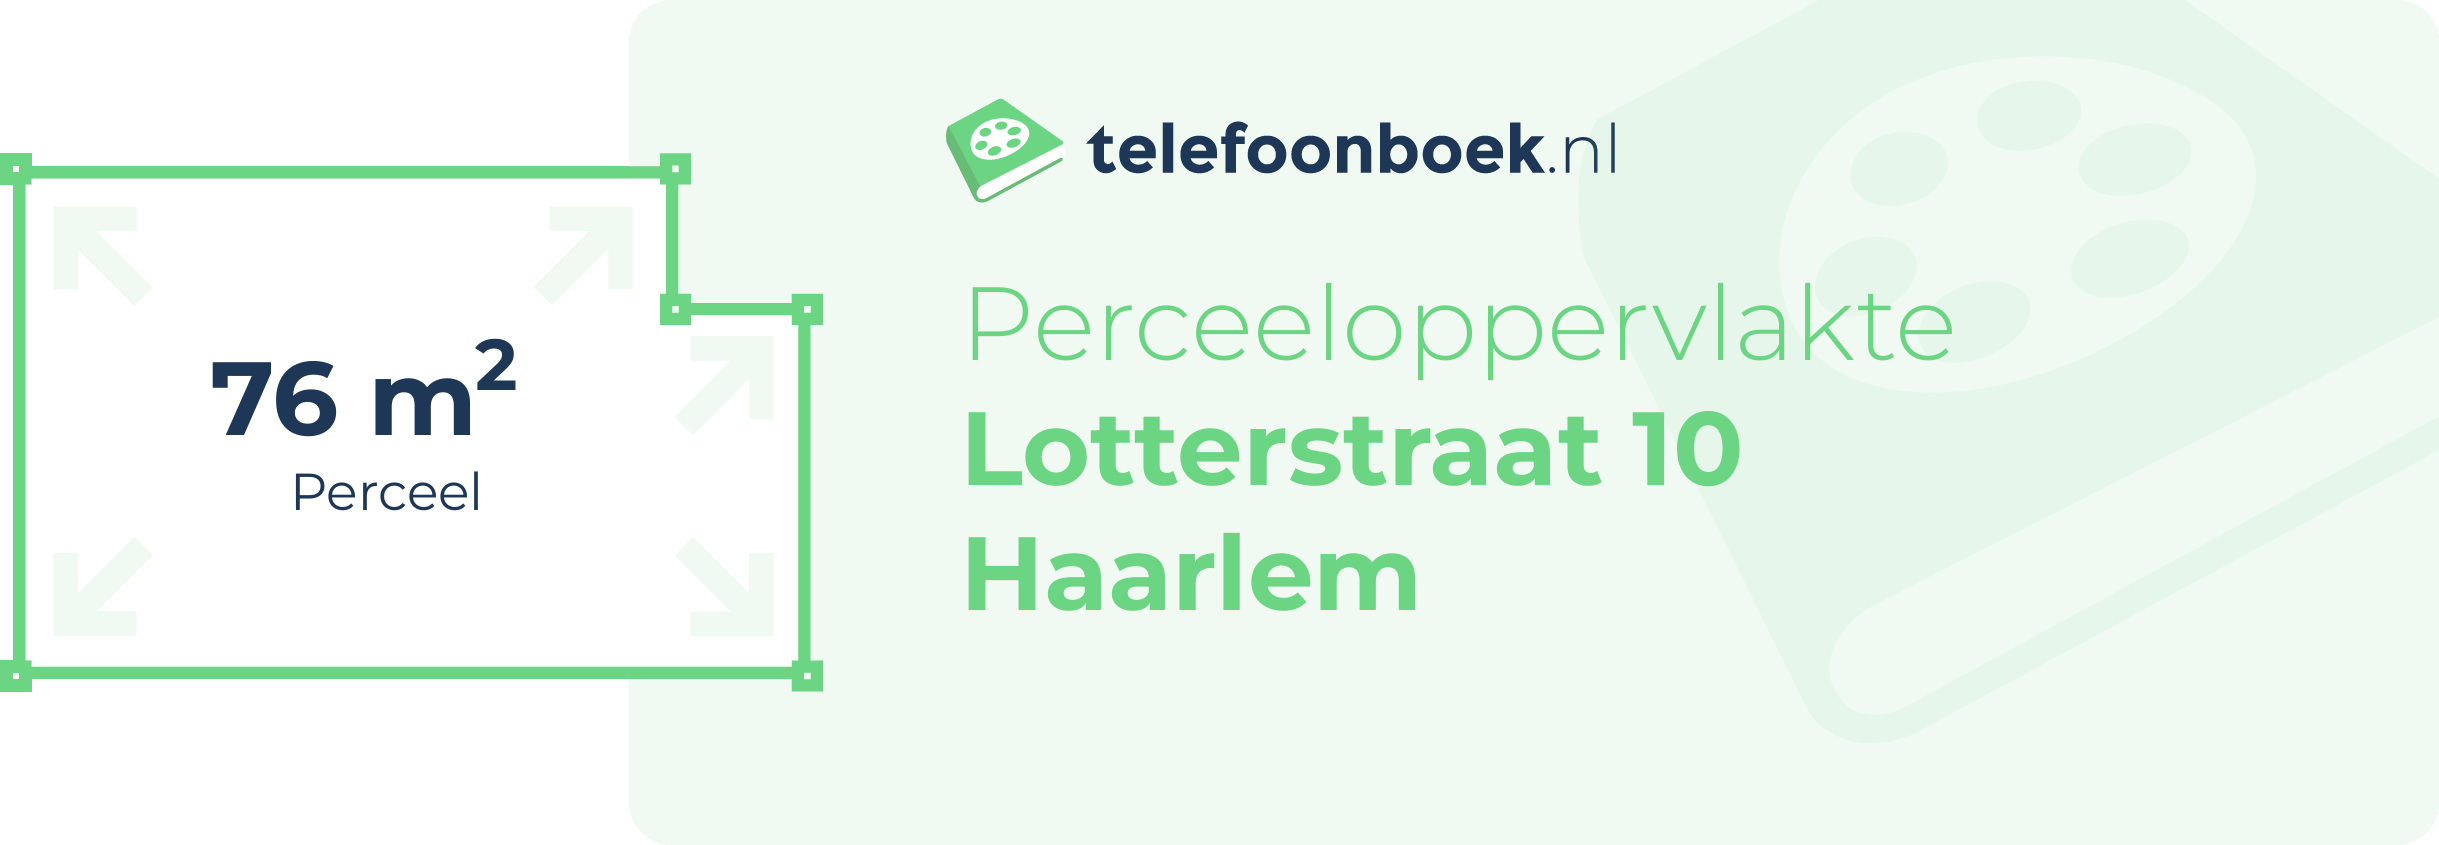 Perceeloppervlakte Lotterstraat 10 Haarlem